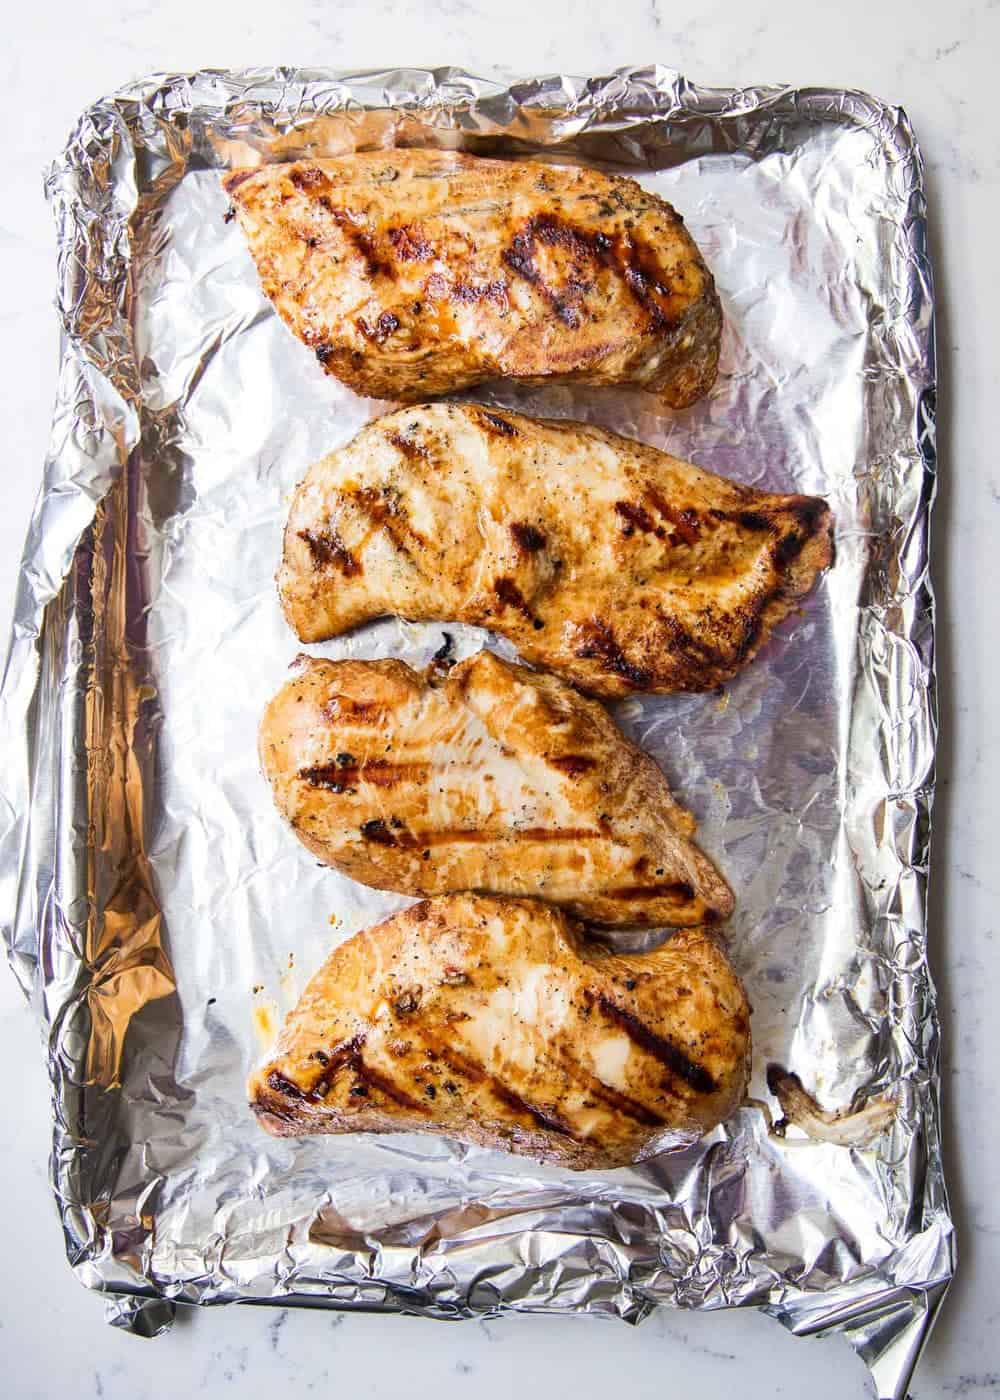 Grilled chicken on baking sheet.